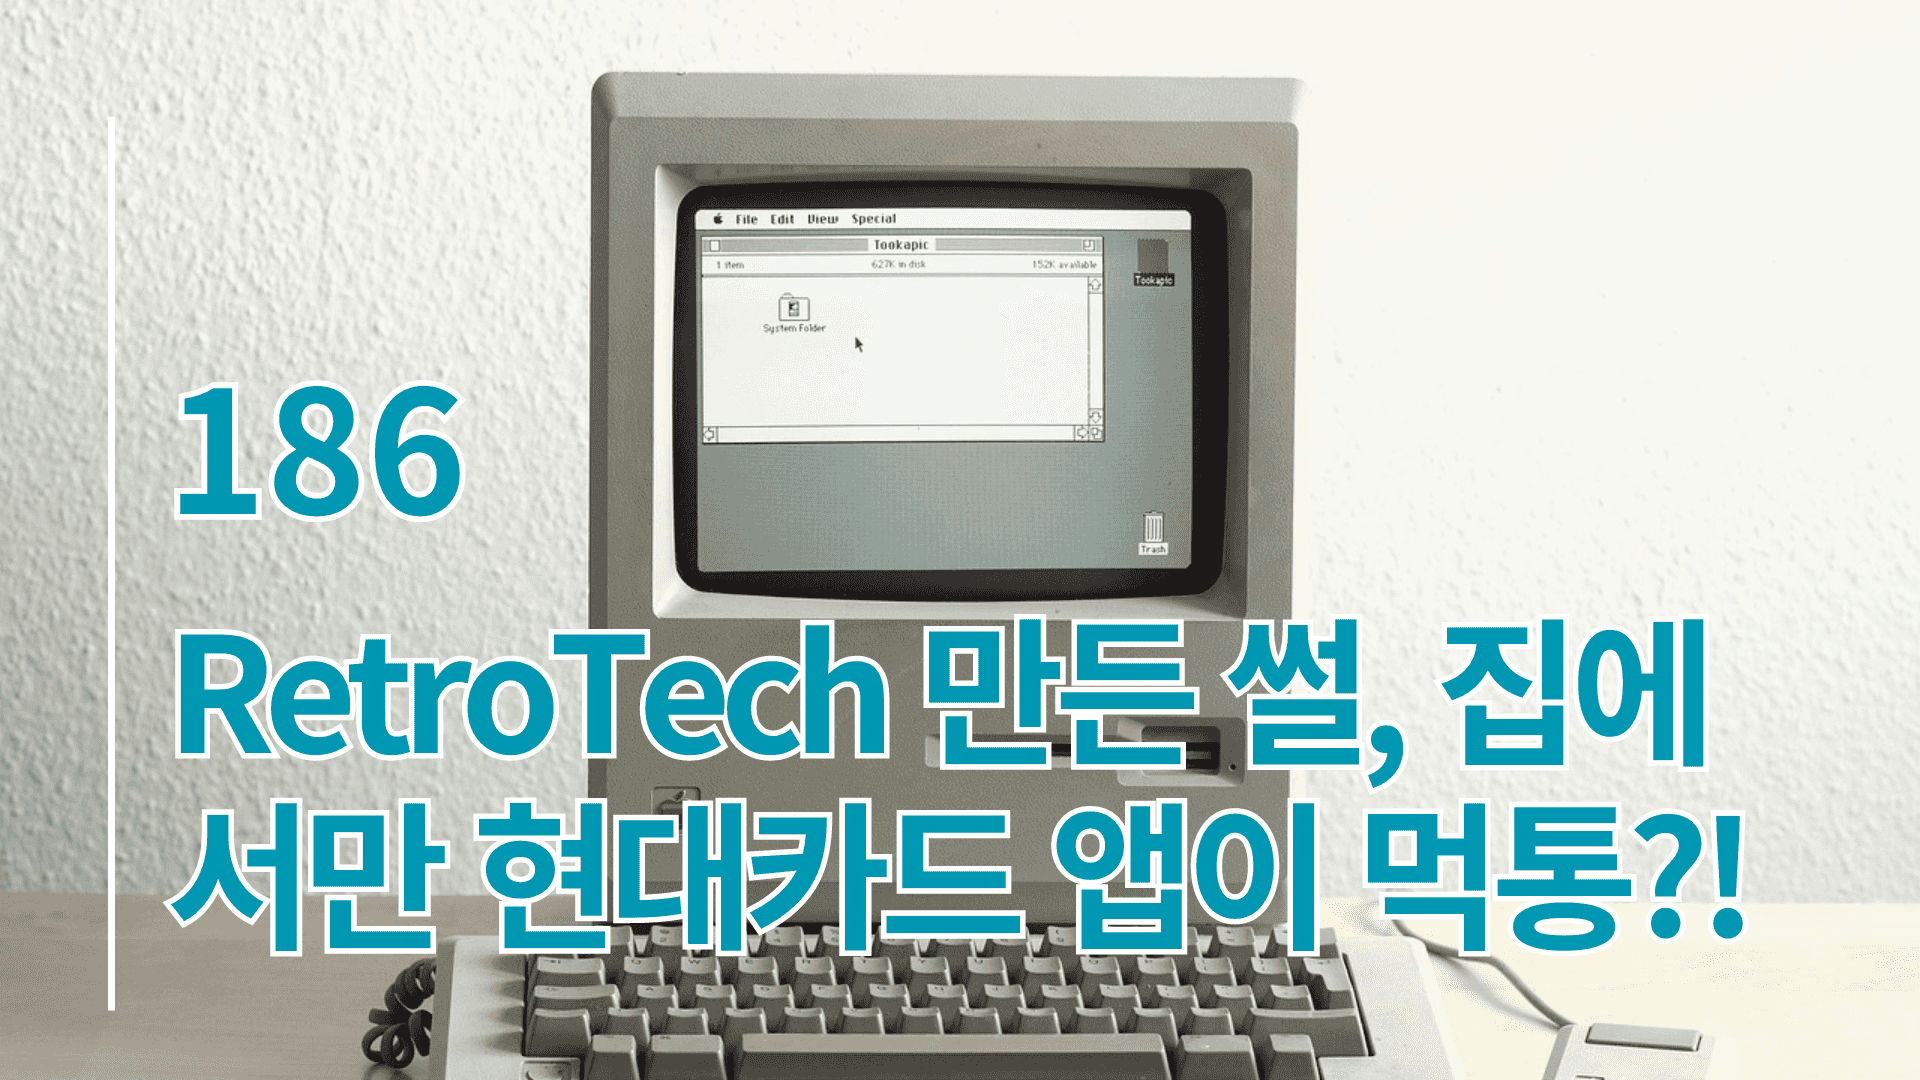 RetroTech 만든 썰, 집에서만 현대카드 앱이 먹통?!